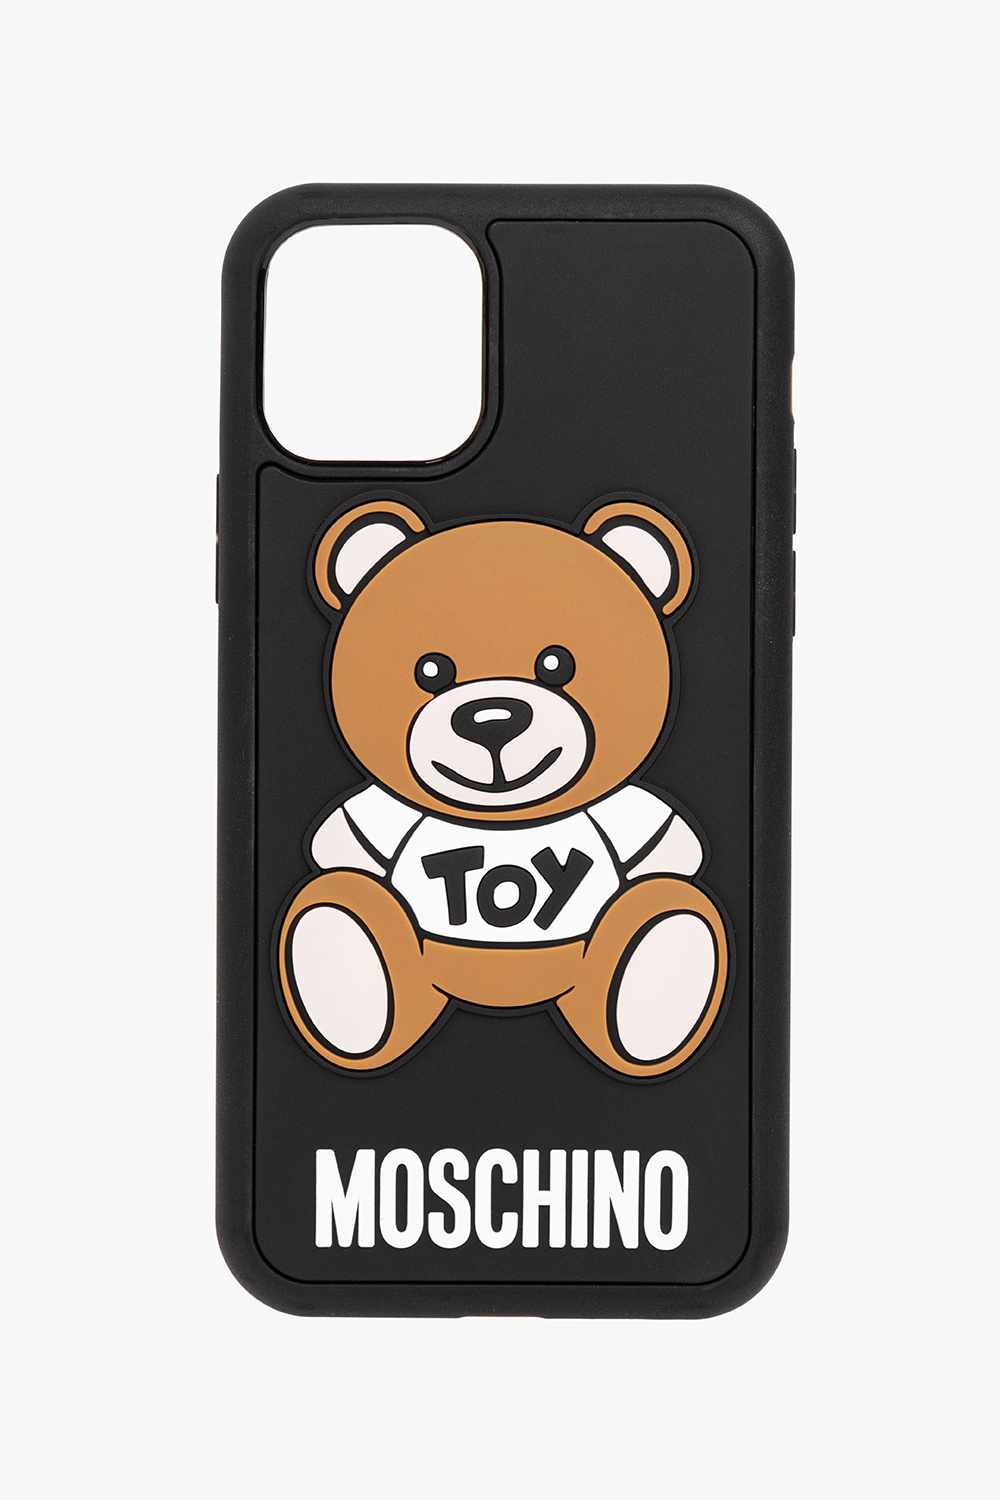 Moschino iPhone 11 Pro case